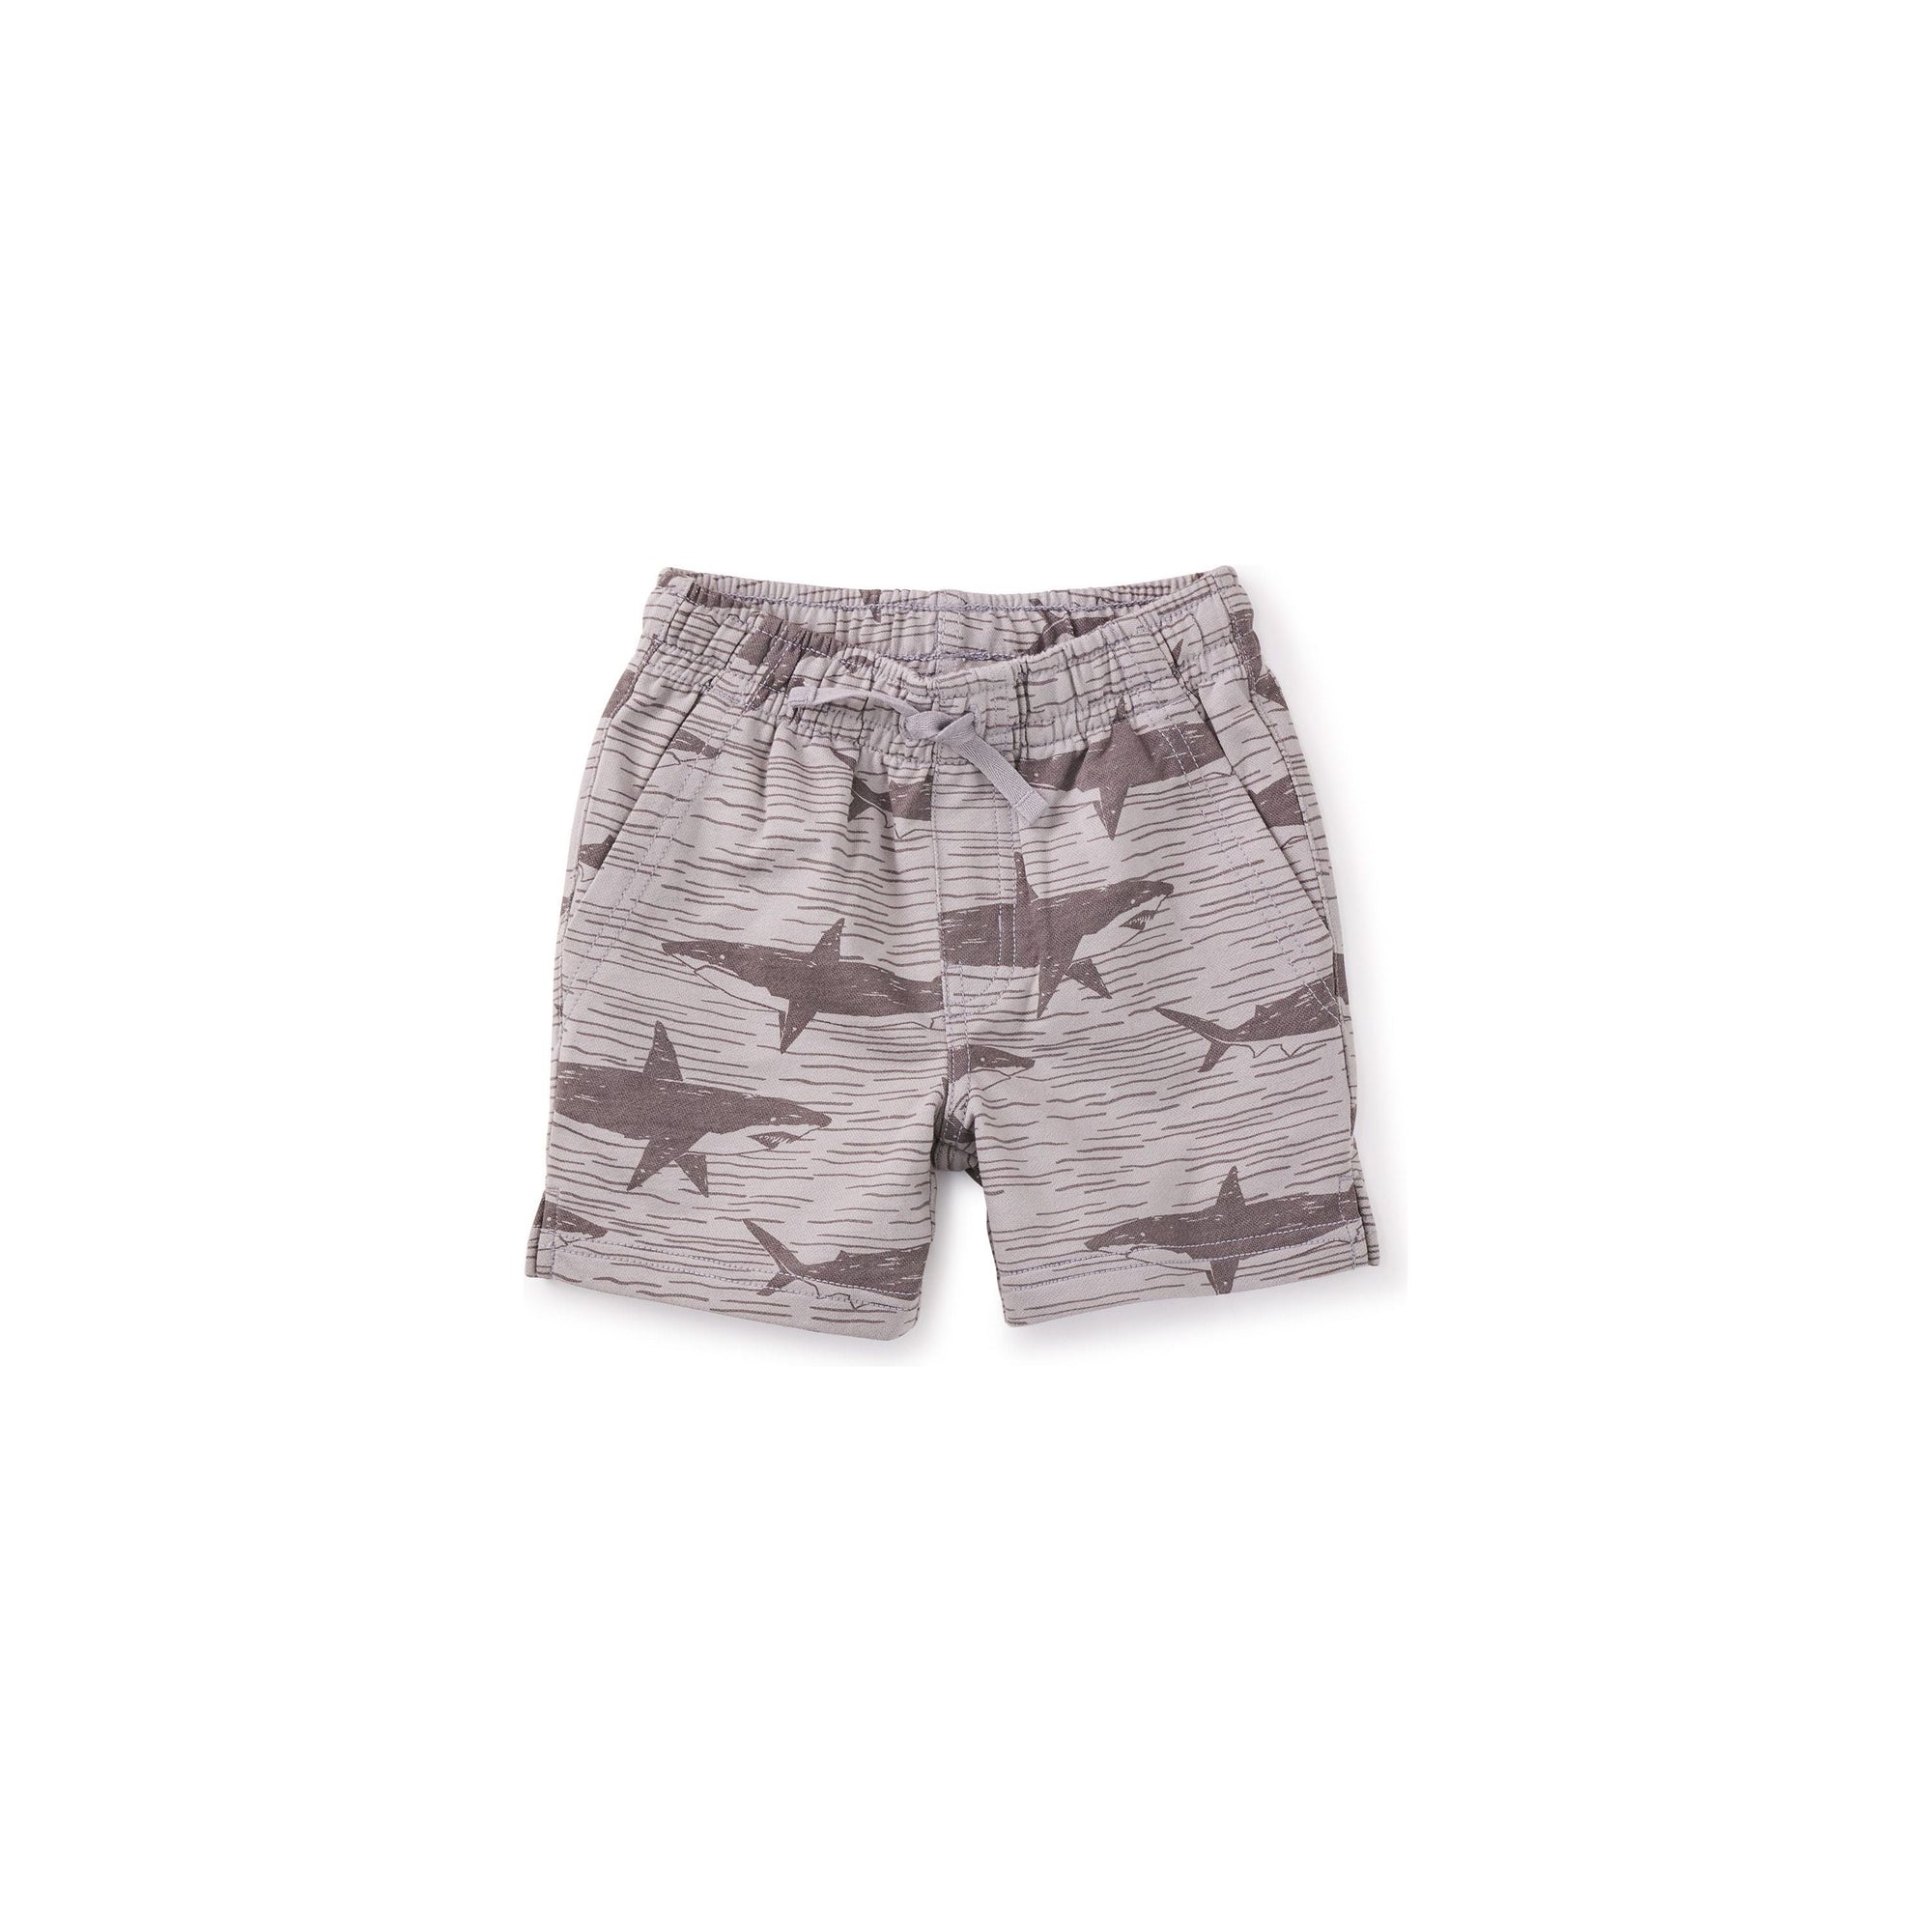 Printed Knit Shorts - Stealth Sharks